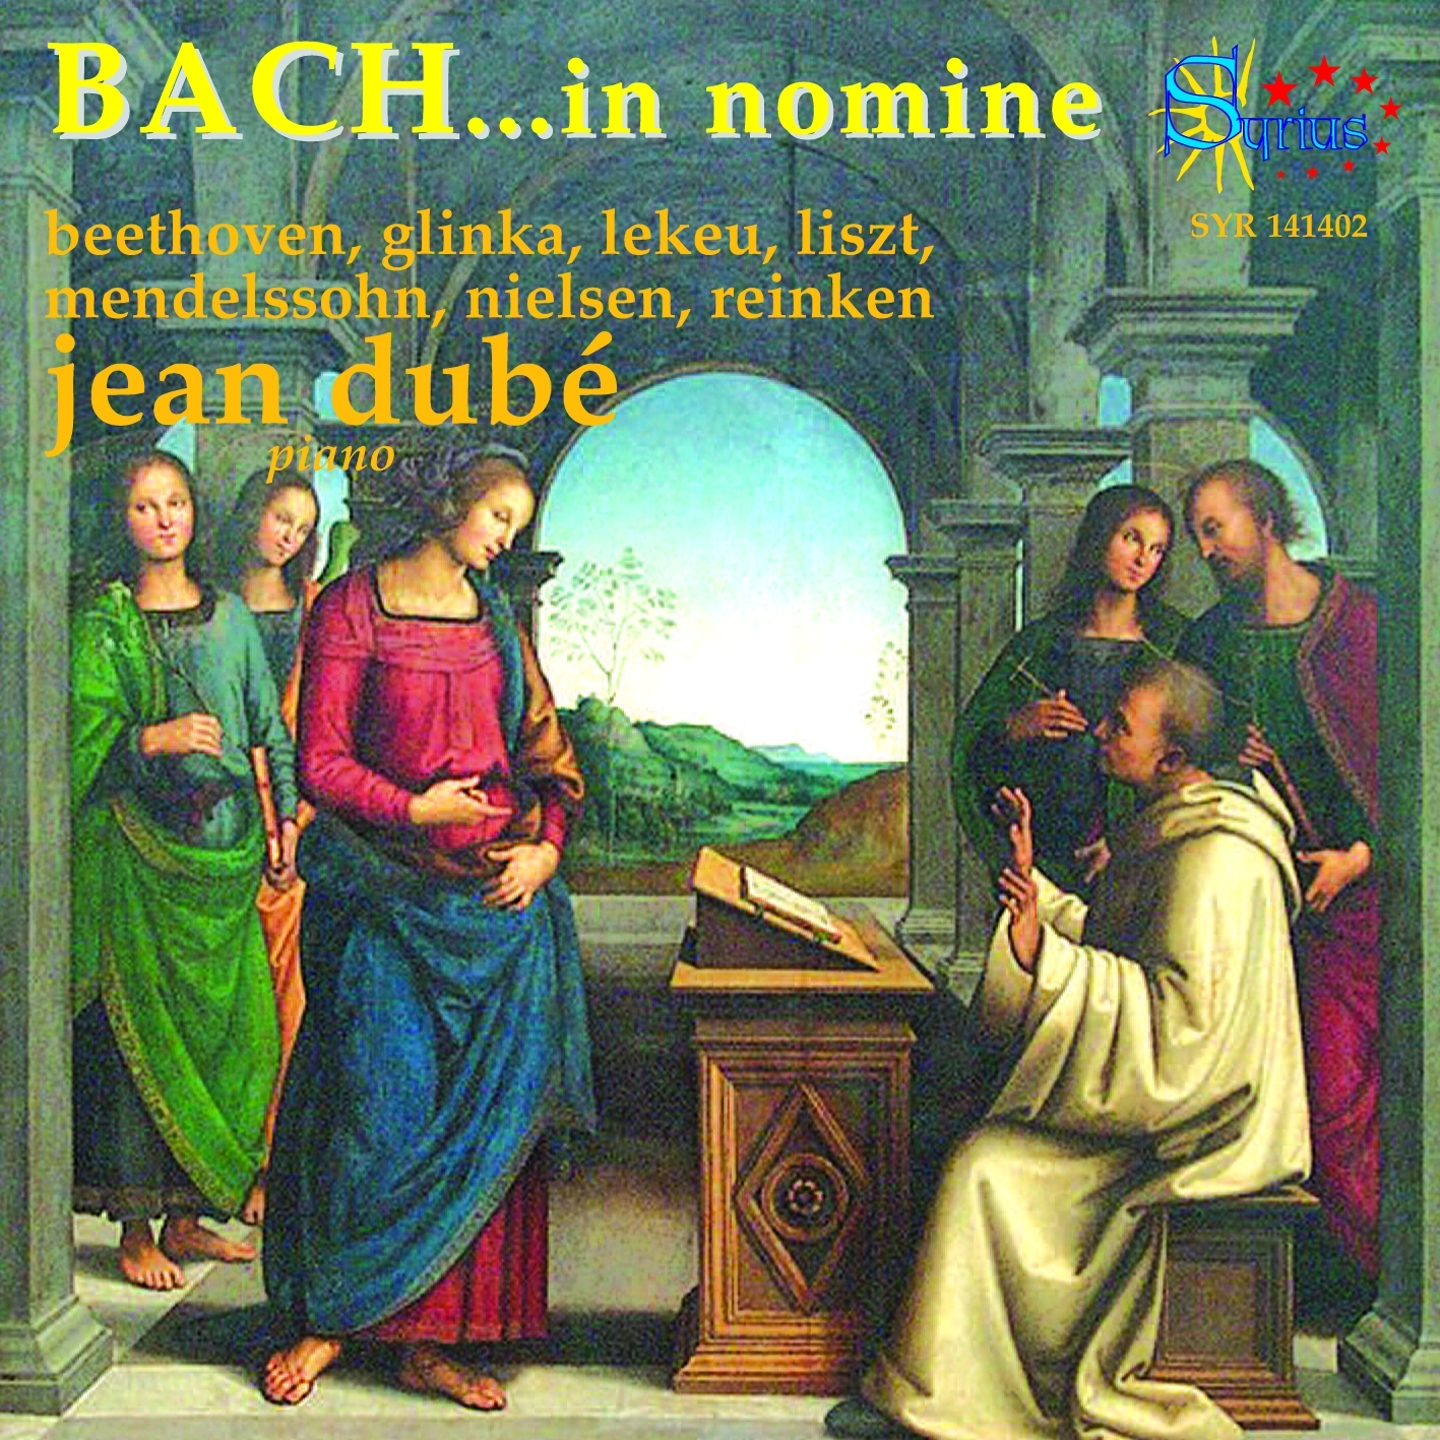 Pre lude  Fugue d' apre s Jean Se bastien Bach, S 462: Fugue